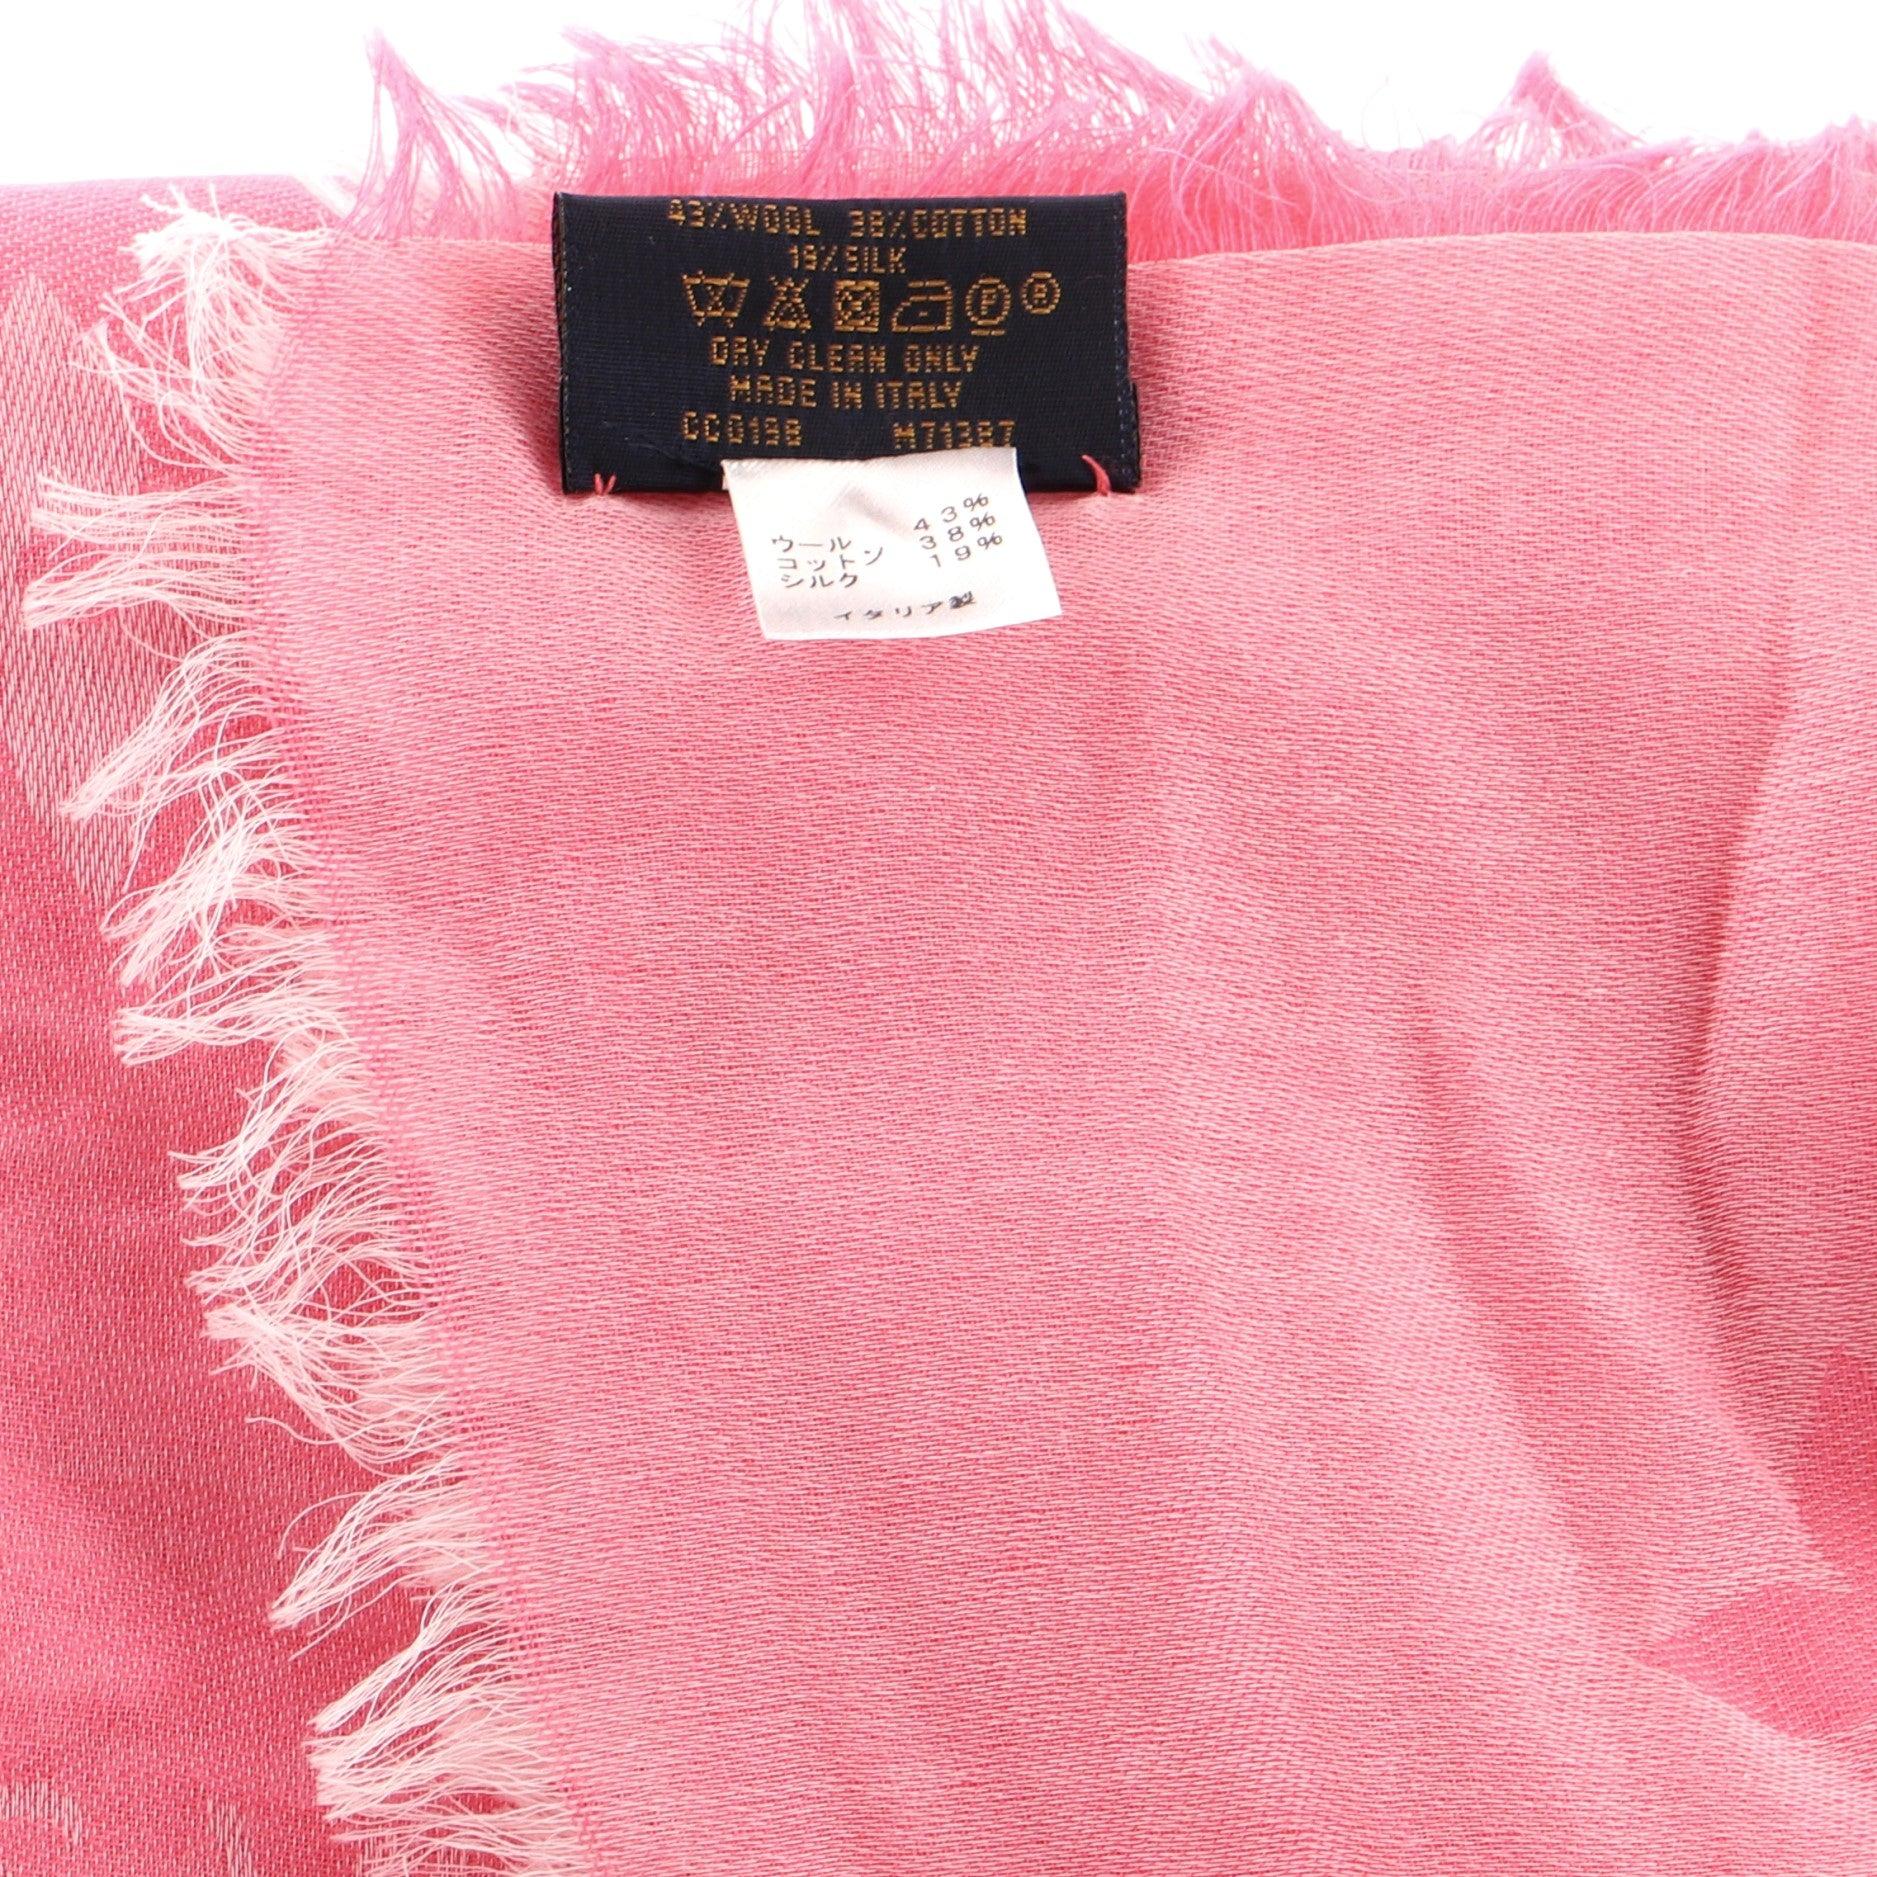 Louis Vuitton Daily Monogram Stole Scarf Wool Silk and Cotton Blend
Pink Silk Wool Cotton

Condition Details: Minimal wear on exterior.

49867MSC

Height 76